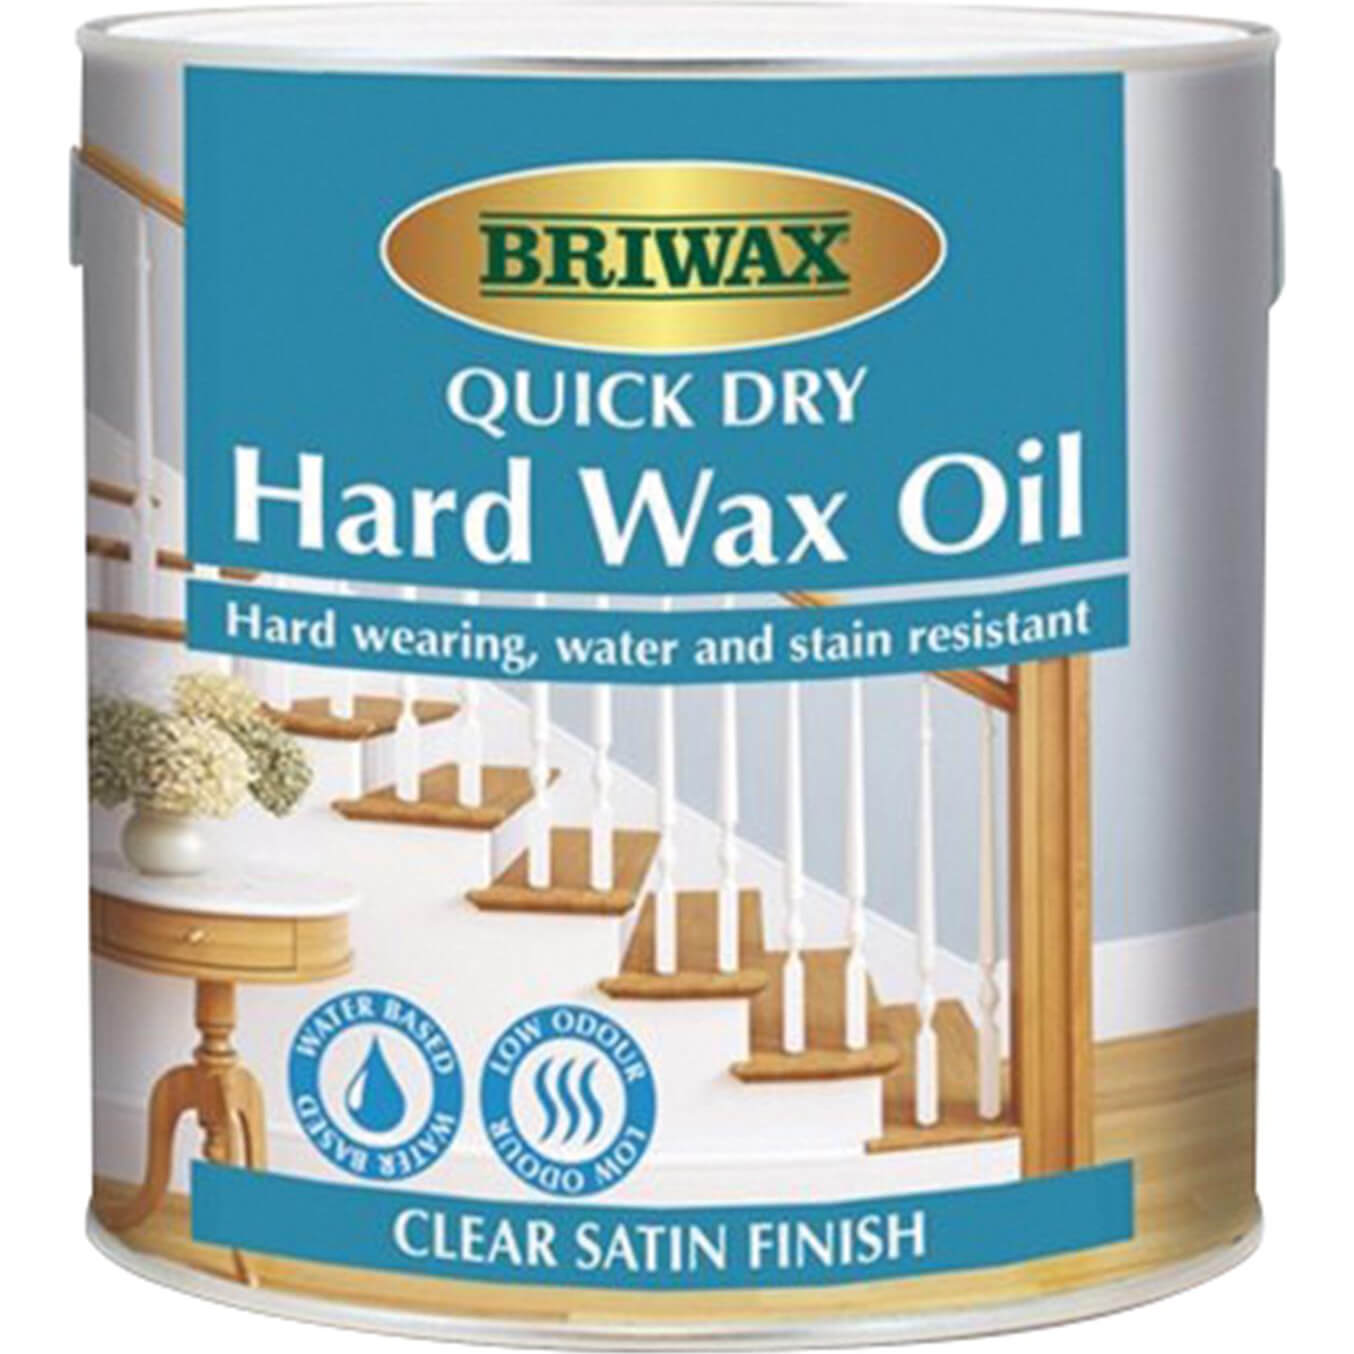 Image of Briwax Quick Dry Hard Wax Oil 1l Clear Satin